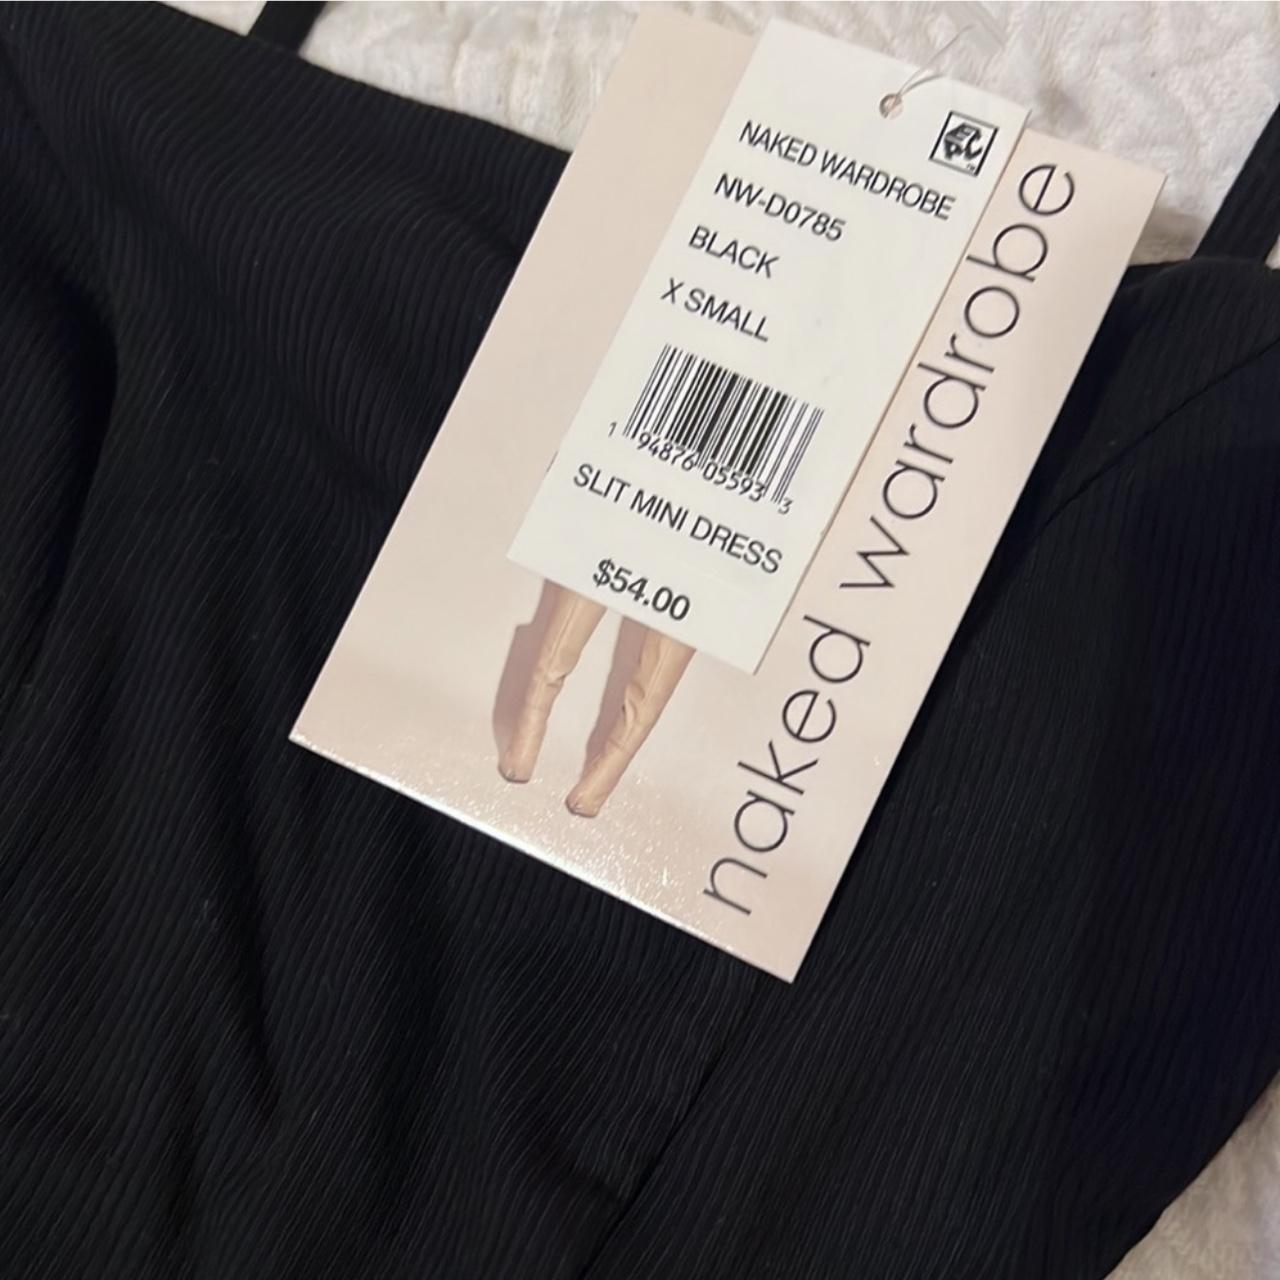 NWT- Naked wardrobe black slit mini dress size - Depop